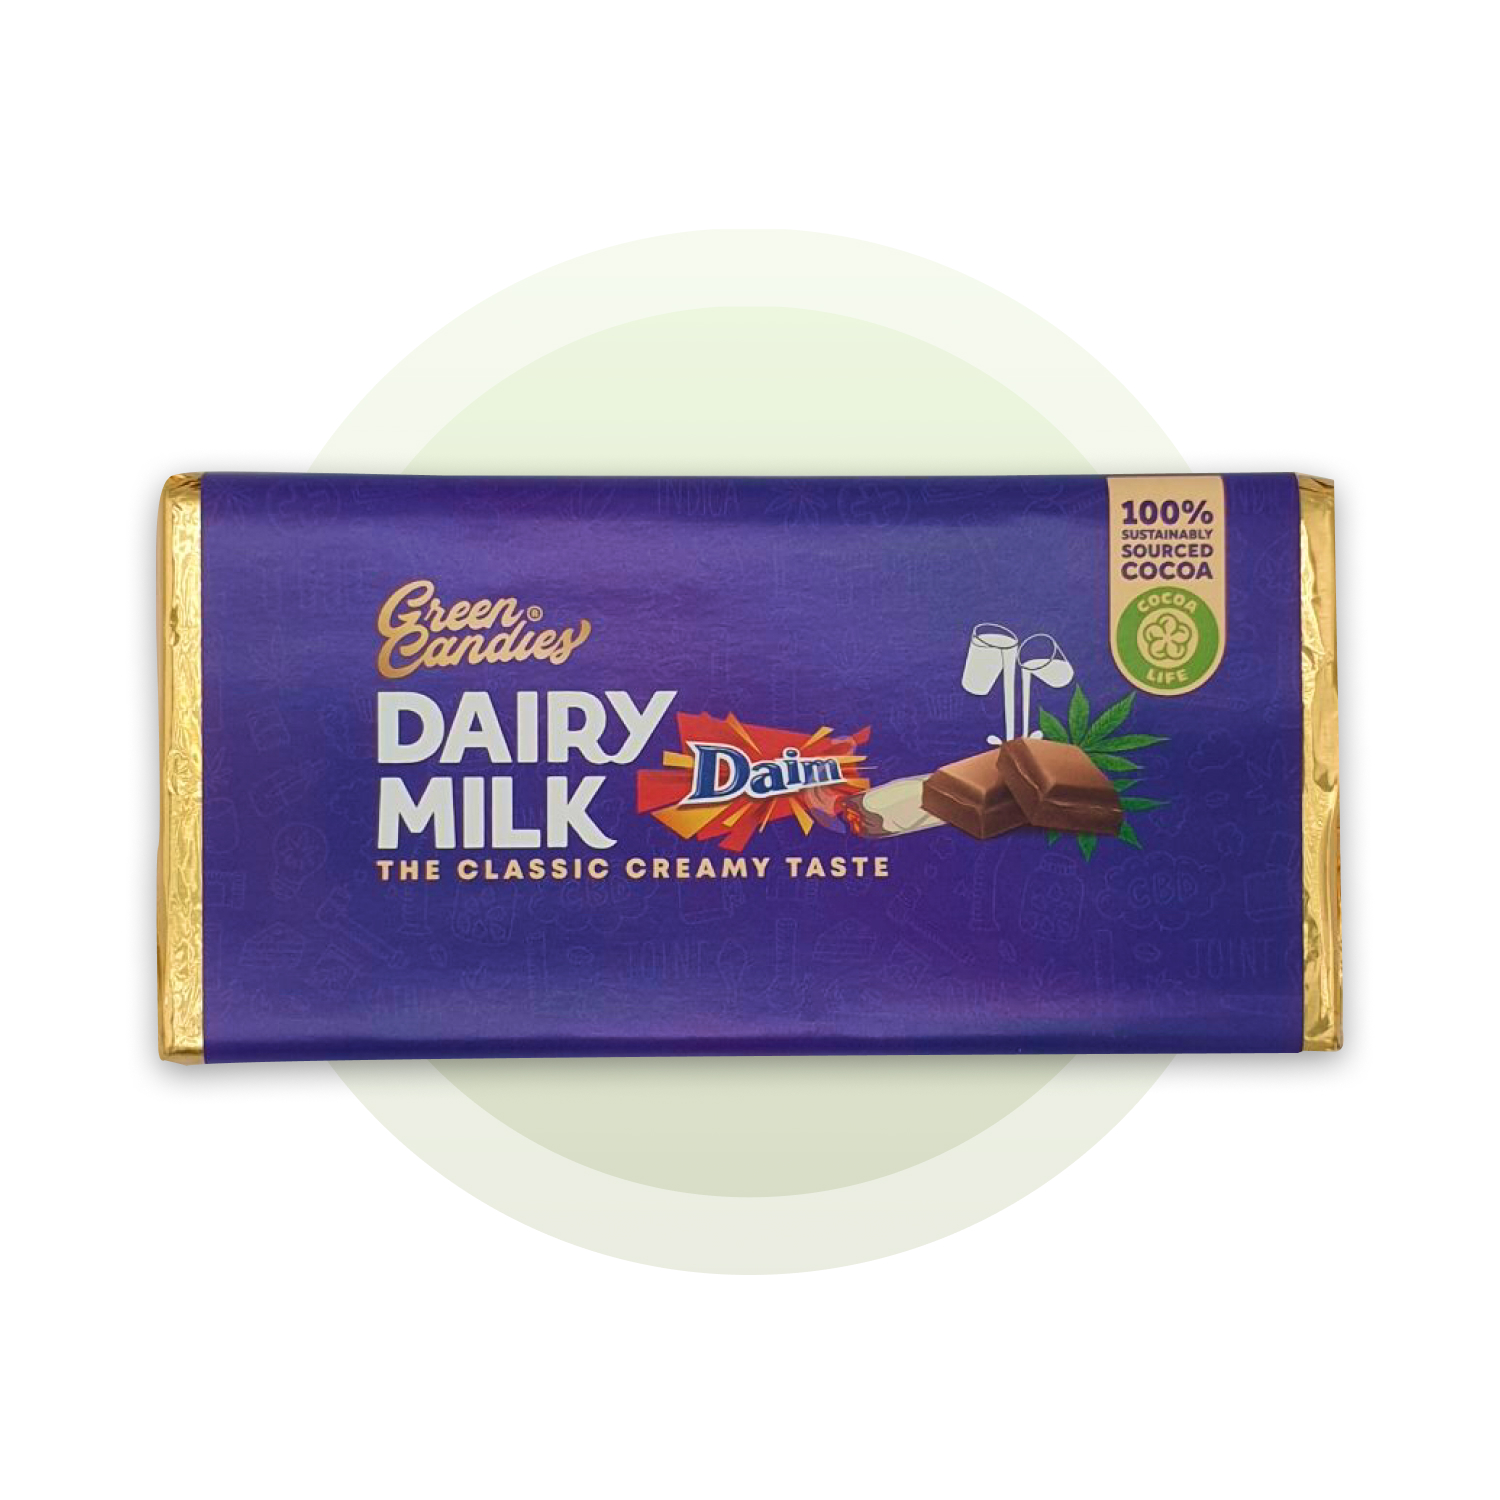 Dairy Milk Daim Chocolate - 500THC